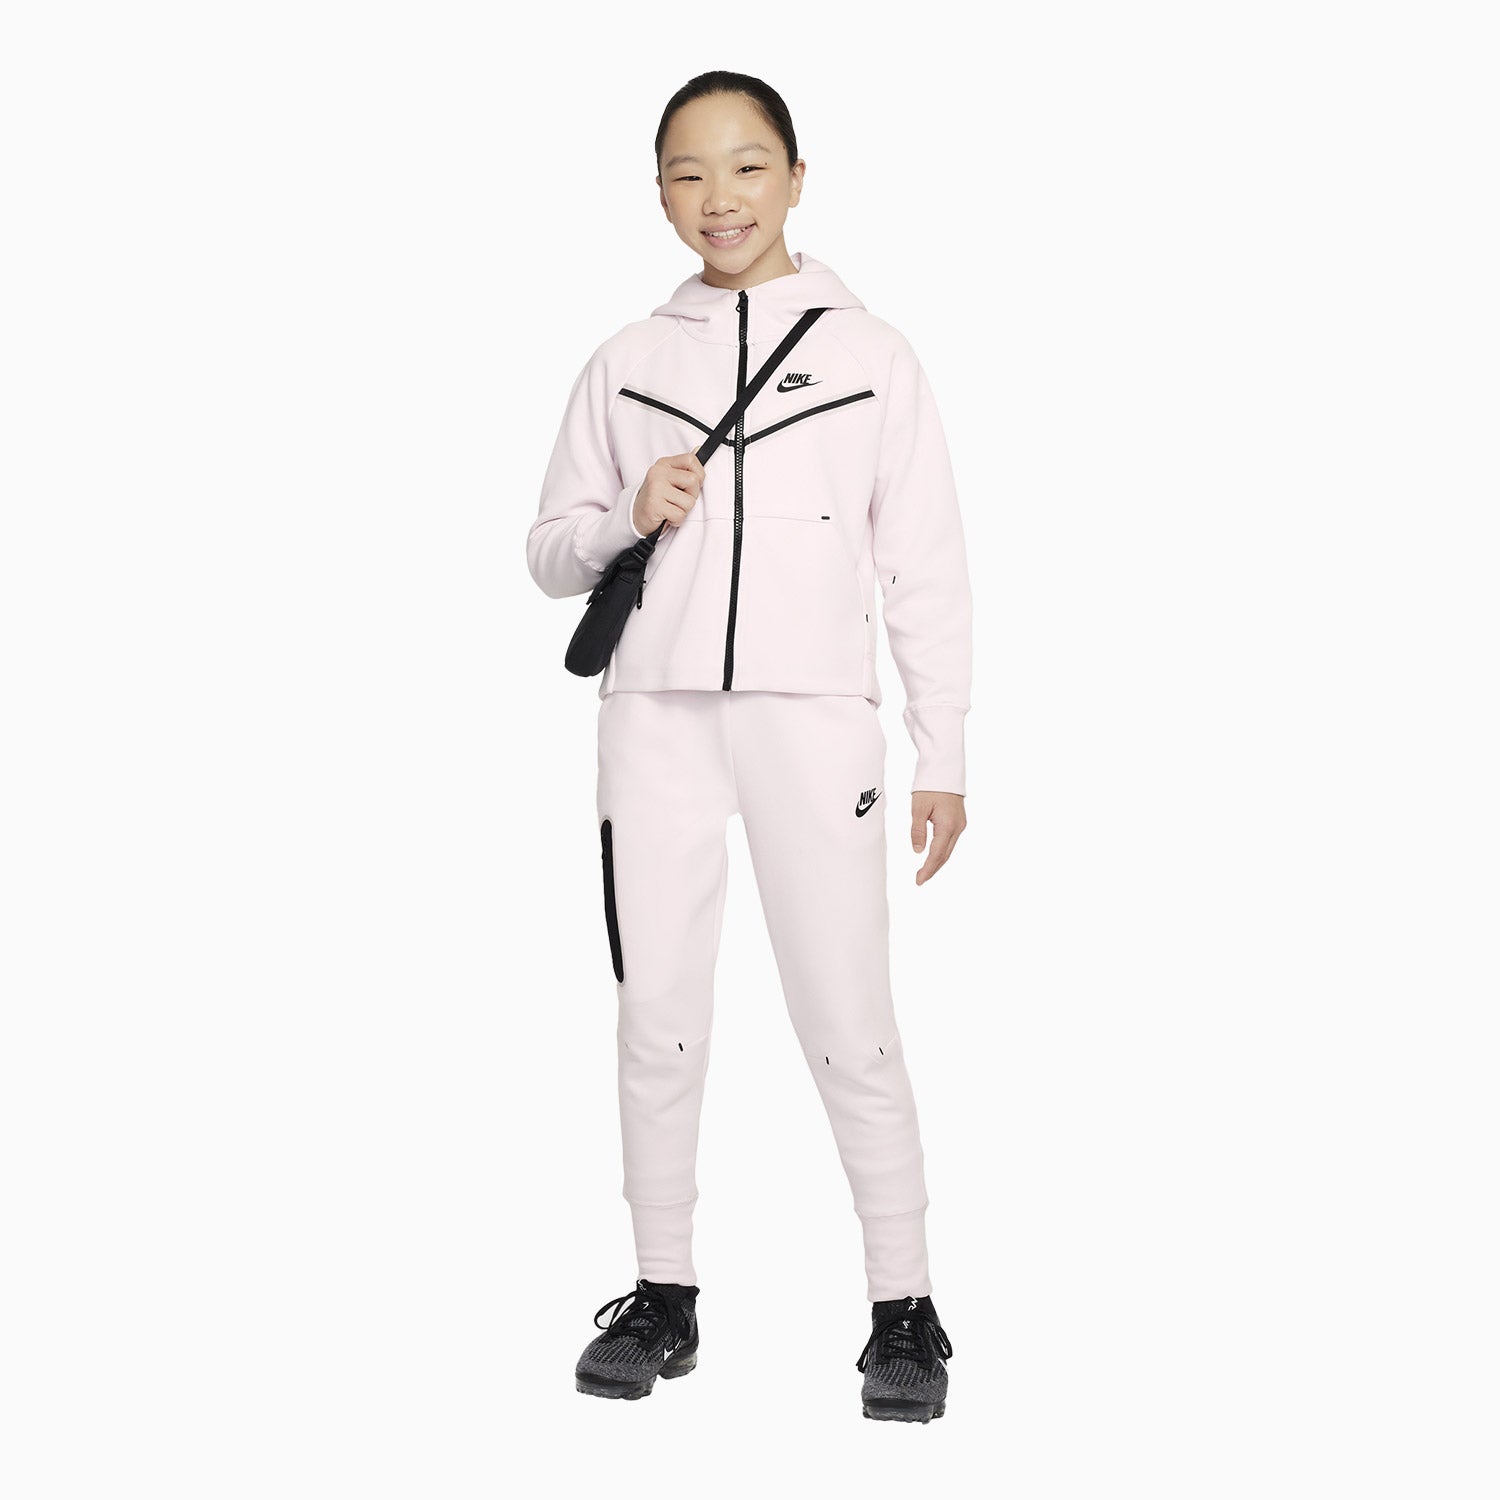 NEW Nike Sportswear Tech Fleece Jogger Pants Girls Pink CZ2595 664 - SIZE M